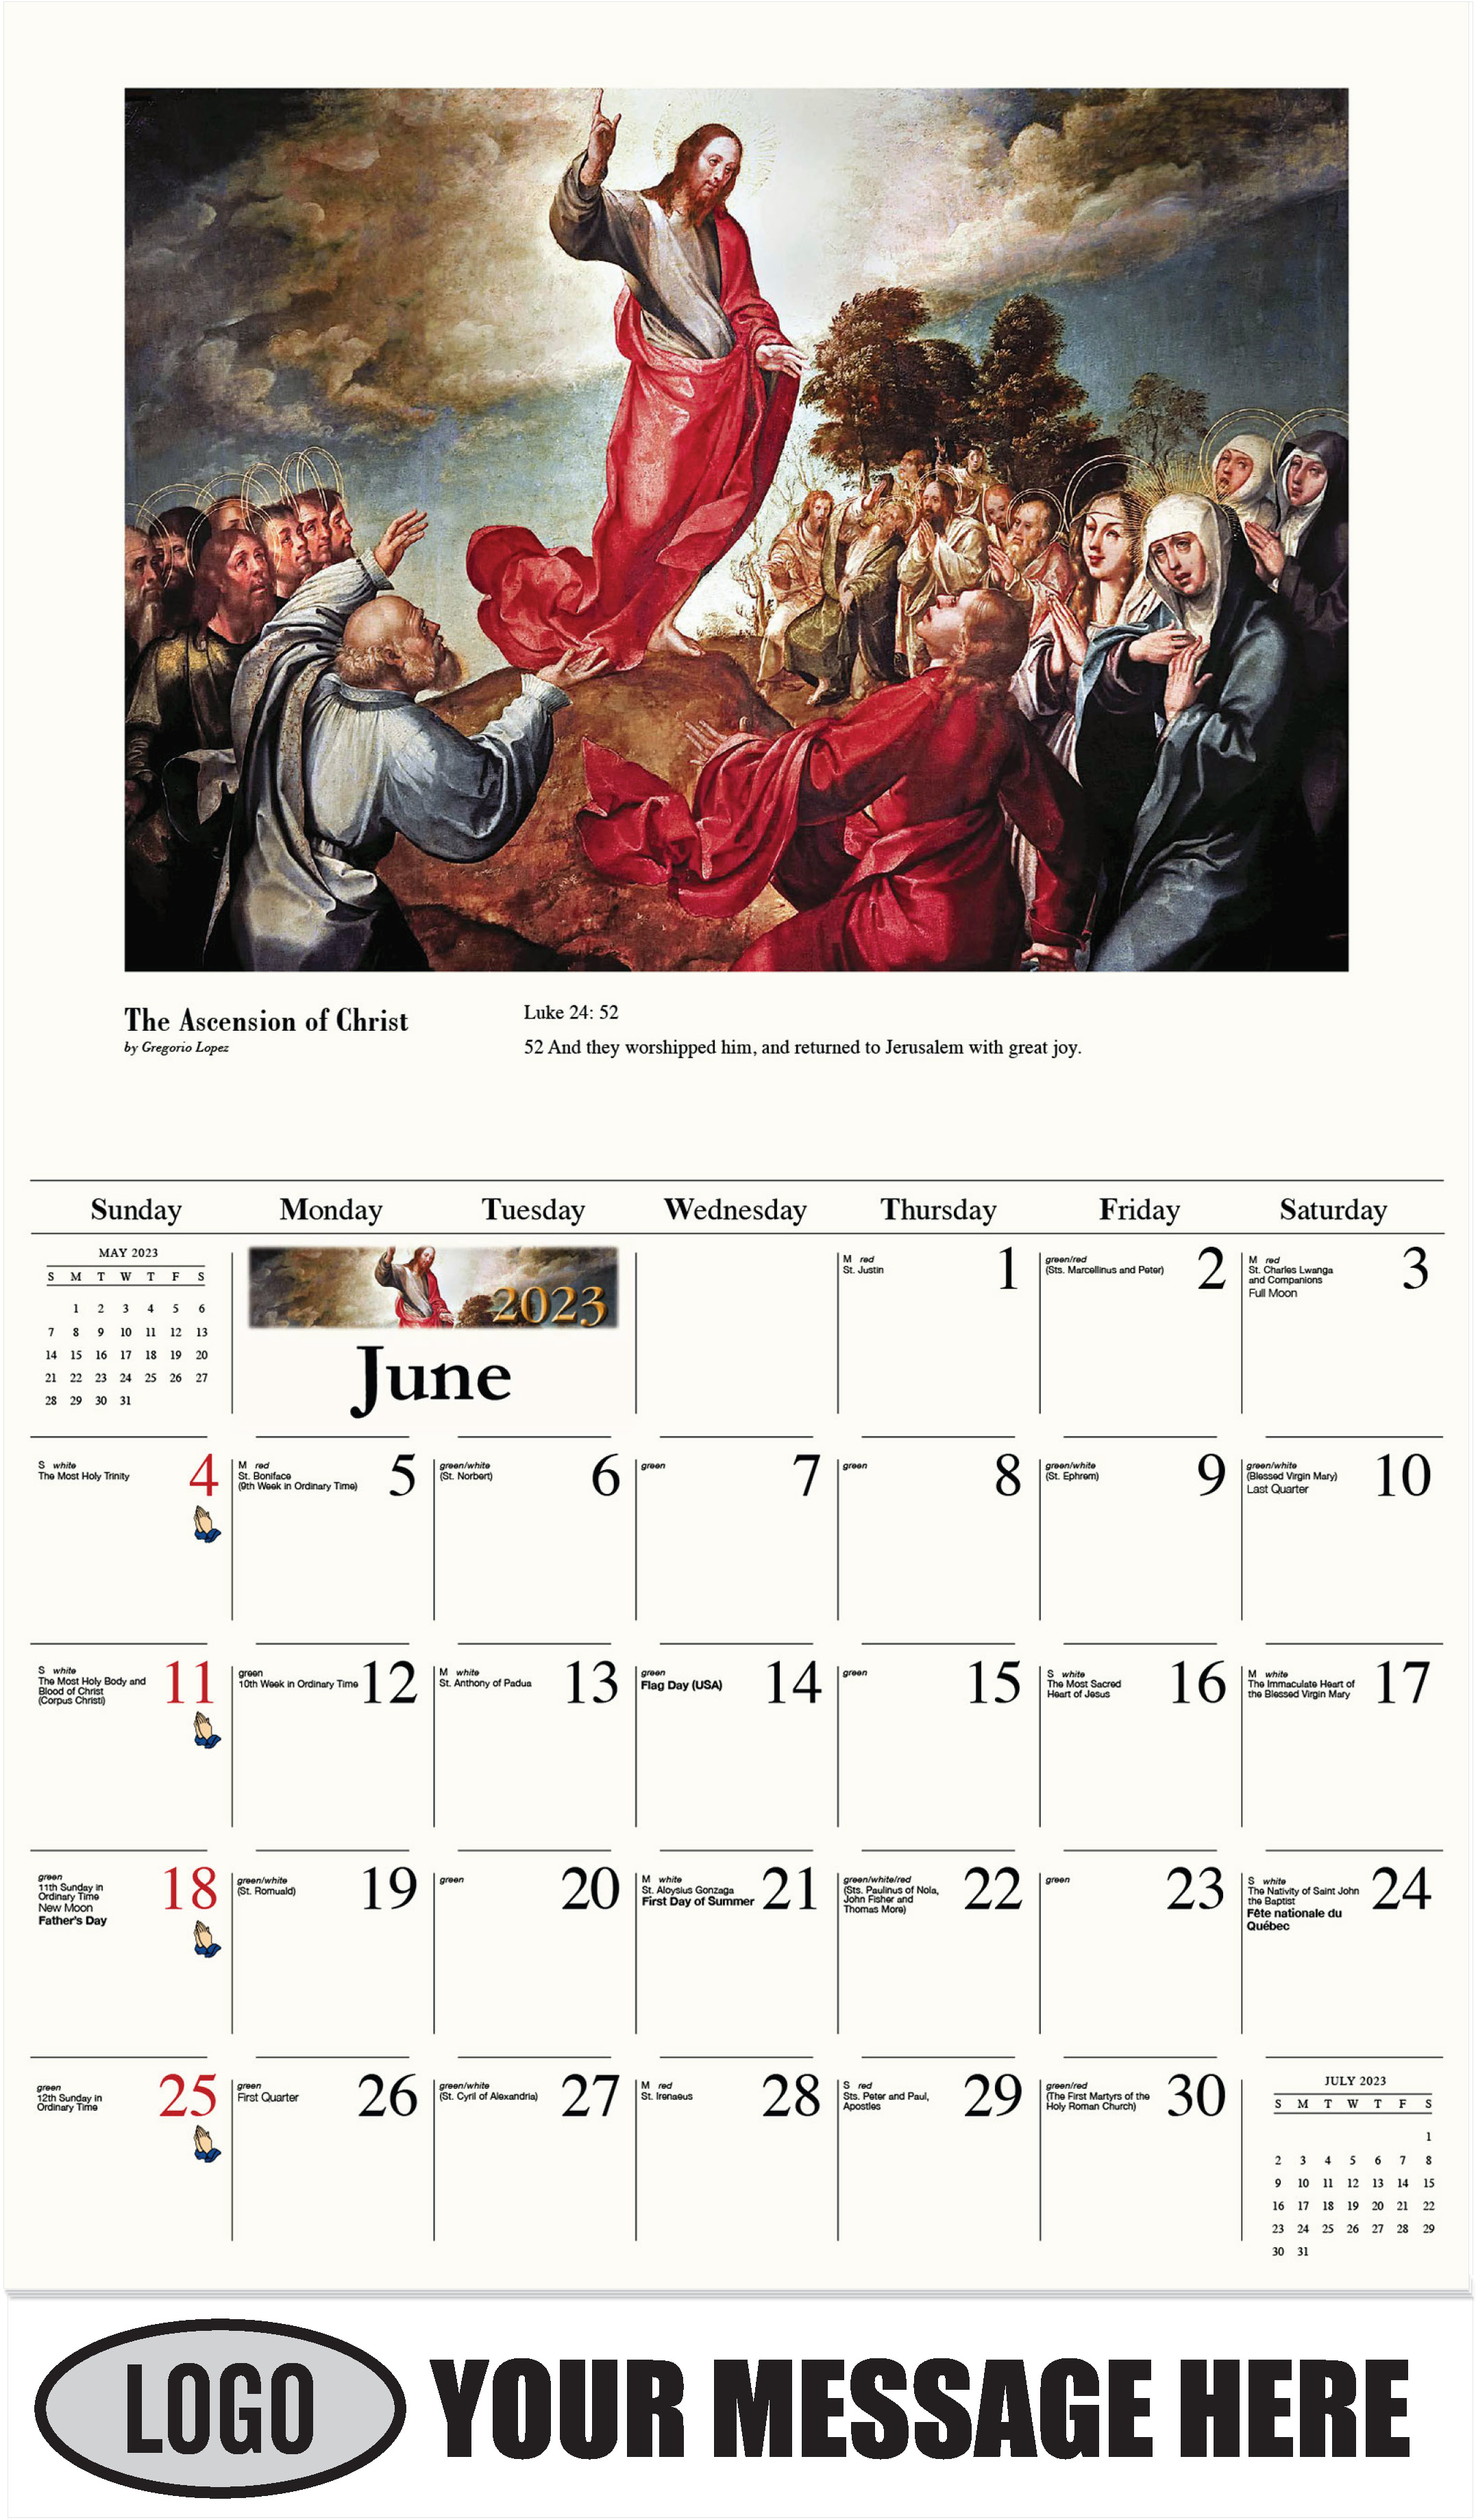 June - Catholic Inspiration 2023 Promotional Calendar